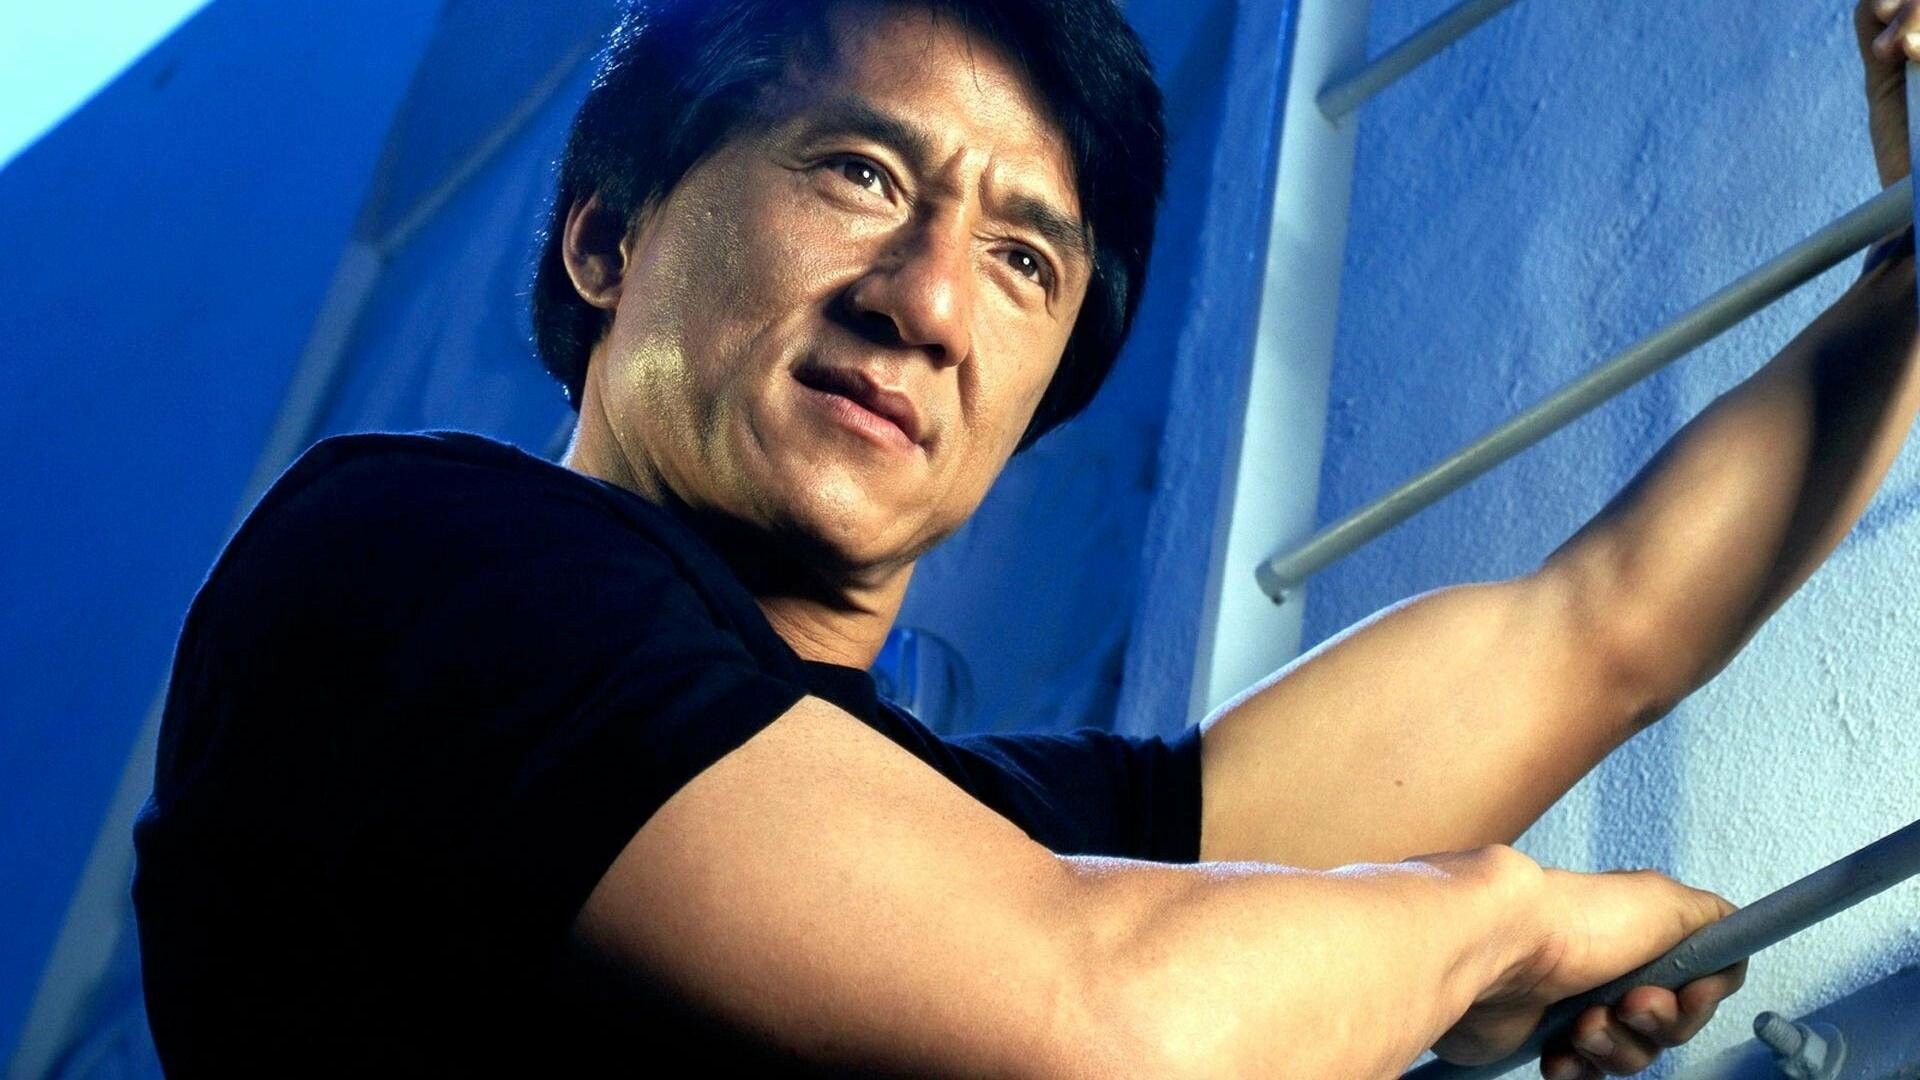 Jackie Chan, High-quality wallpaper, Full HD resolution, Computer background, 1920x1080 Full HD Desktop